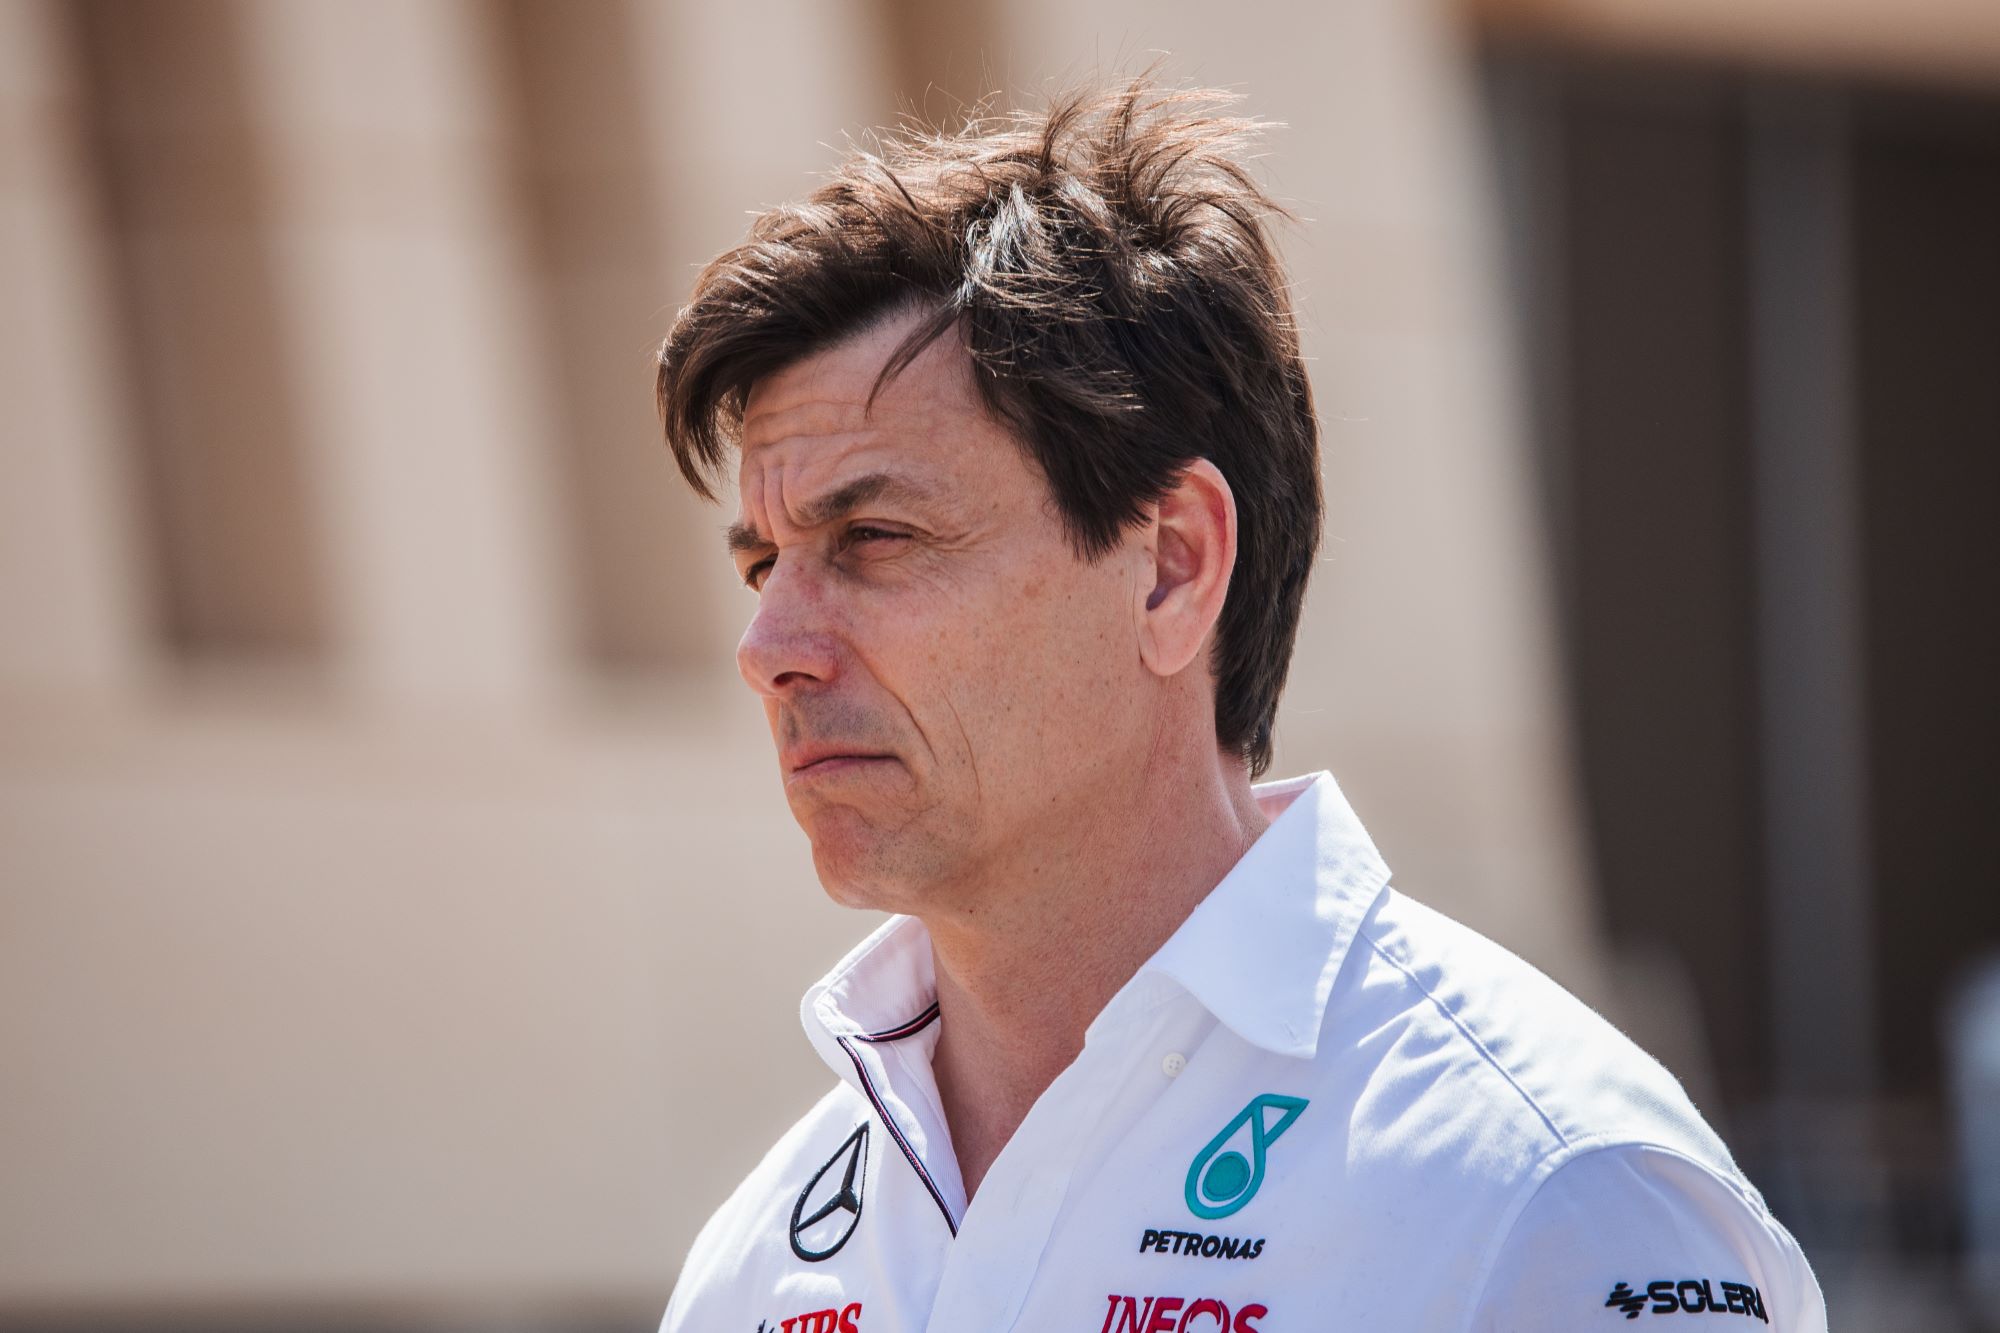 F1: Wolff quer avaliar com calma nova promessa da Mercedes para vaga de Hamilton